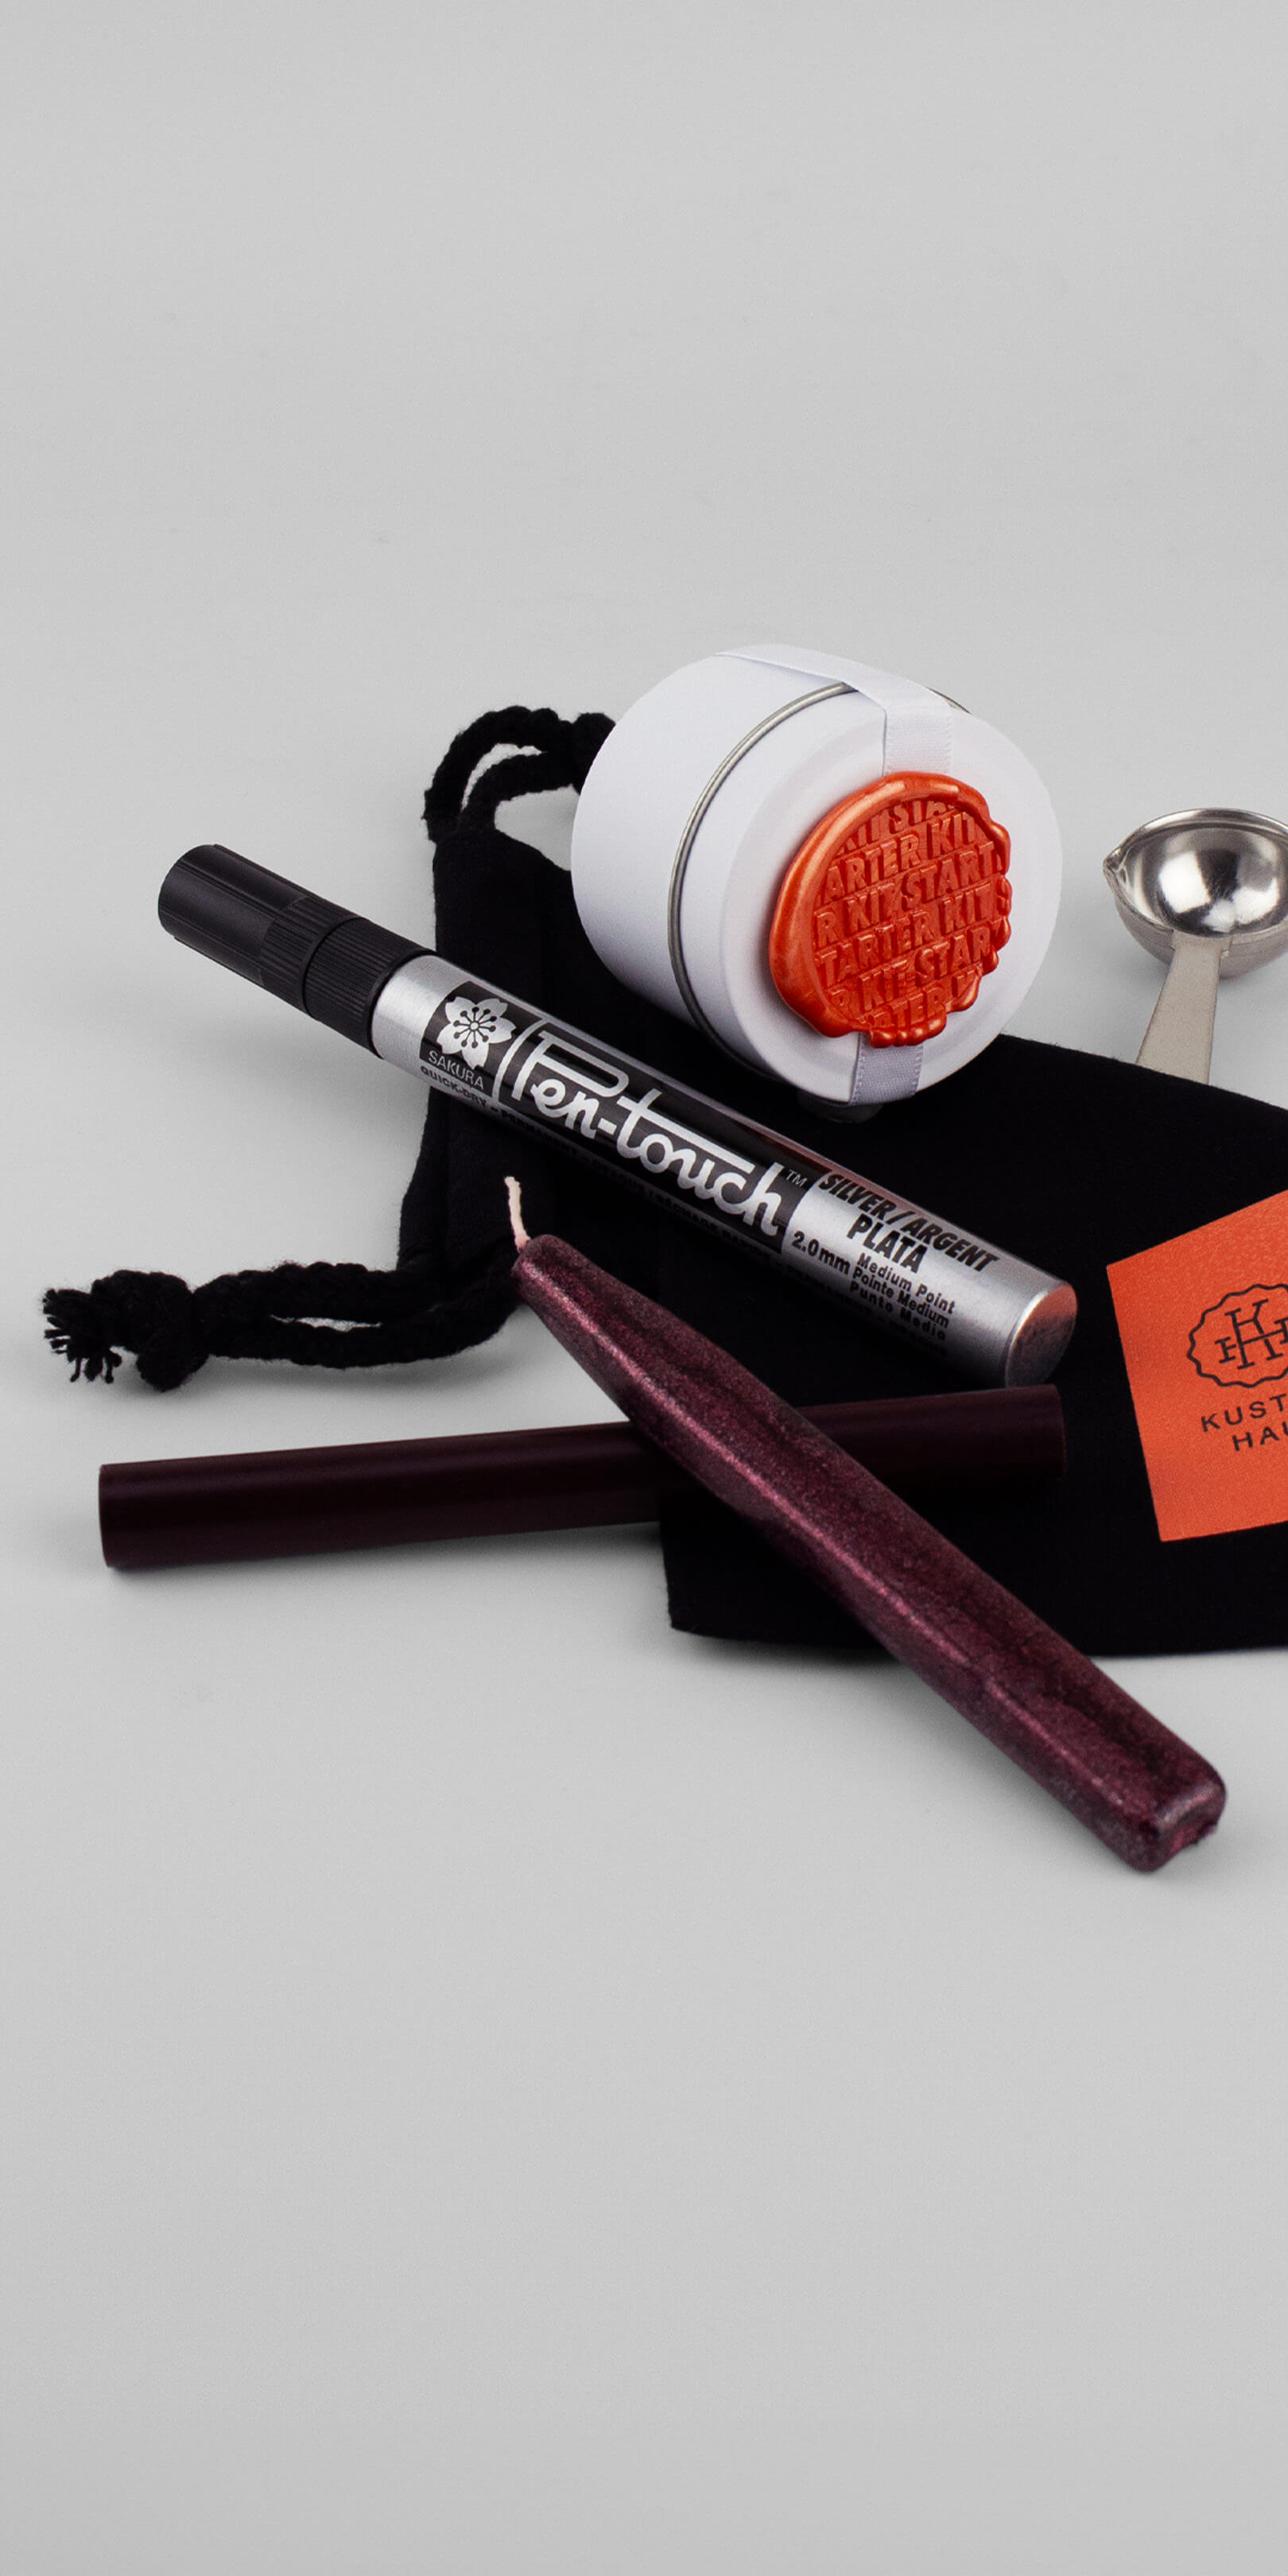 Kustom Haus Wax Seal Starter Kit with Sealing Wax, Melting Spoon, Candle, Metallic Marker and Calico Drawstring Storage Bag